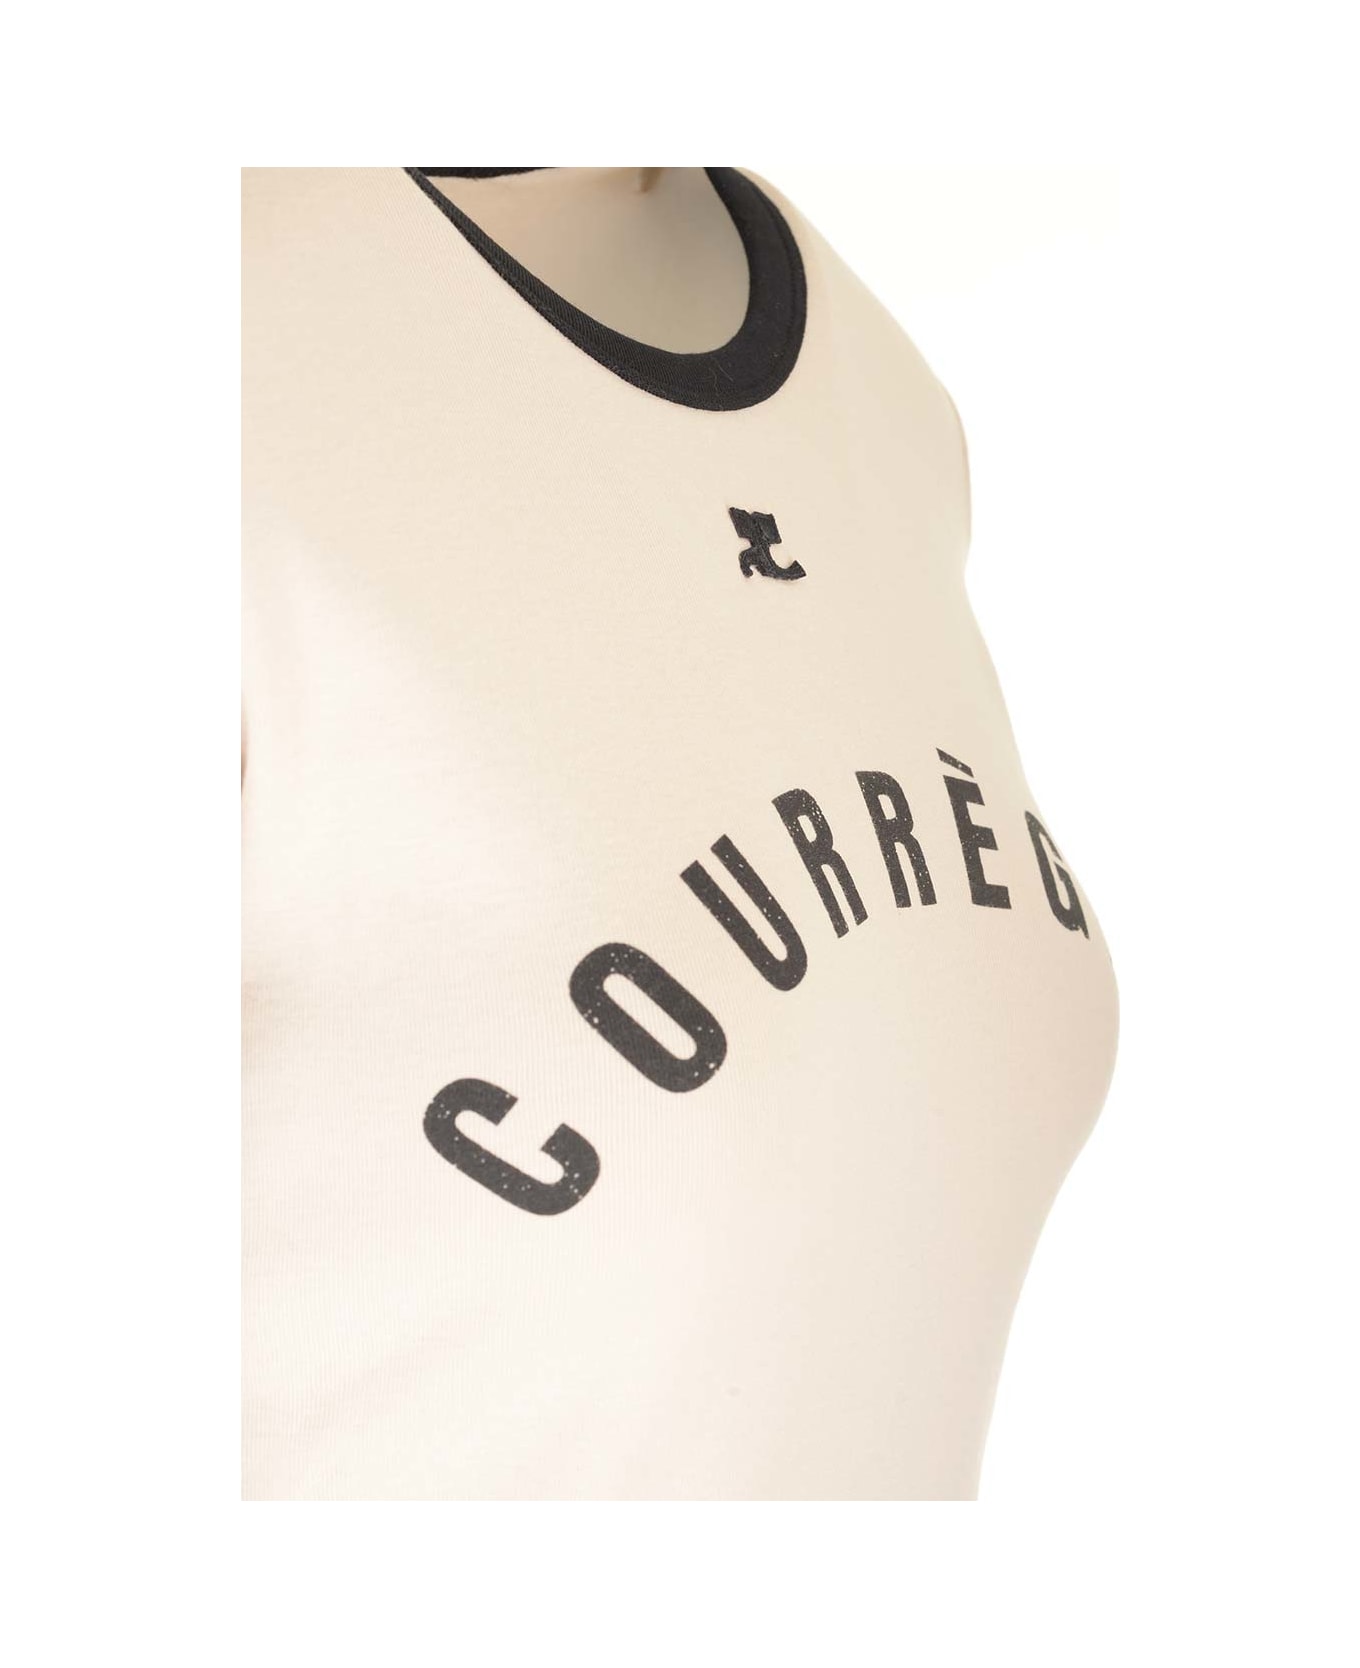 Courrèges Strap Detail T-shirt - Giallo Tシャツ